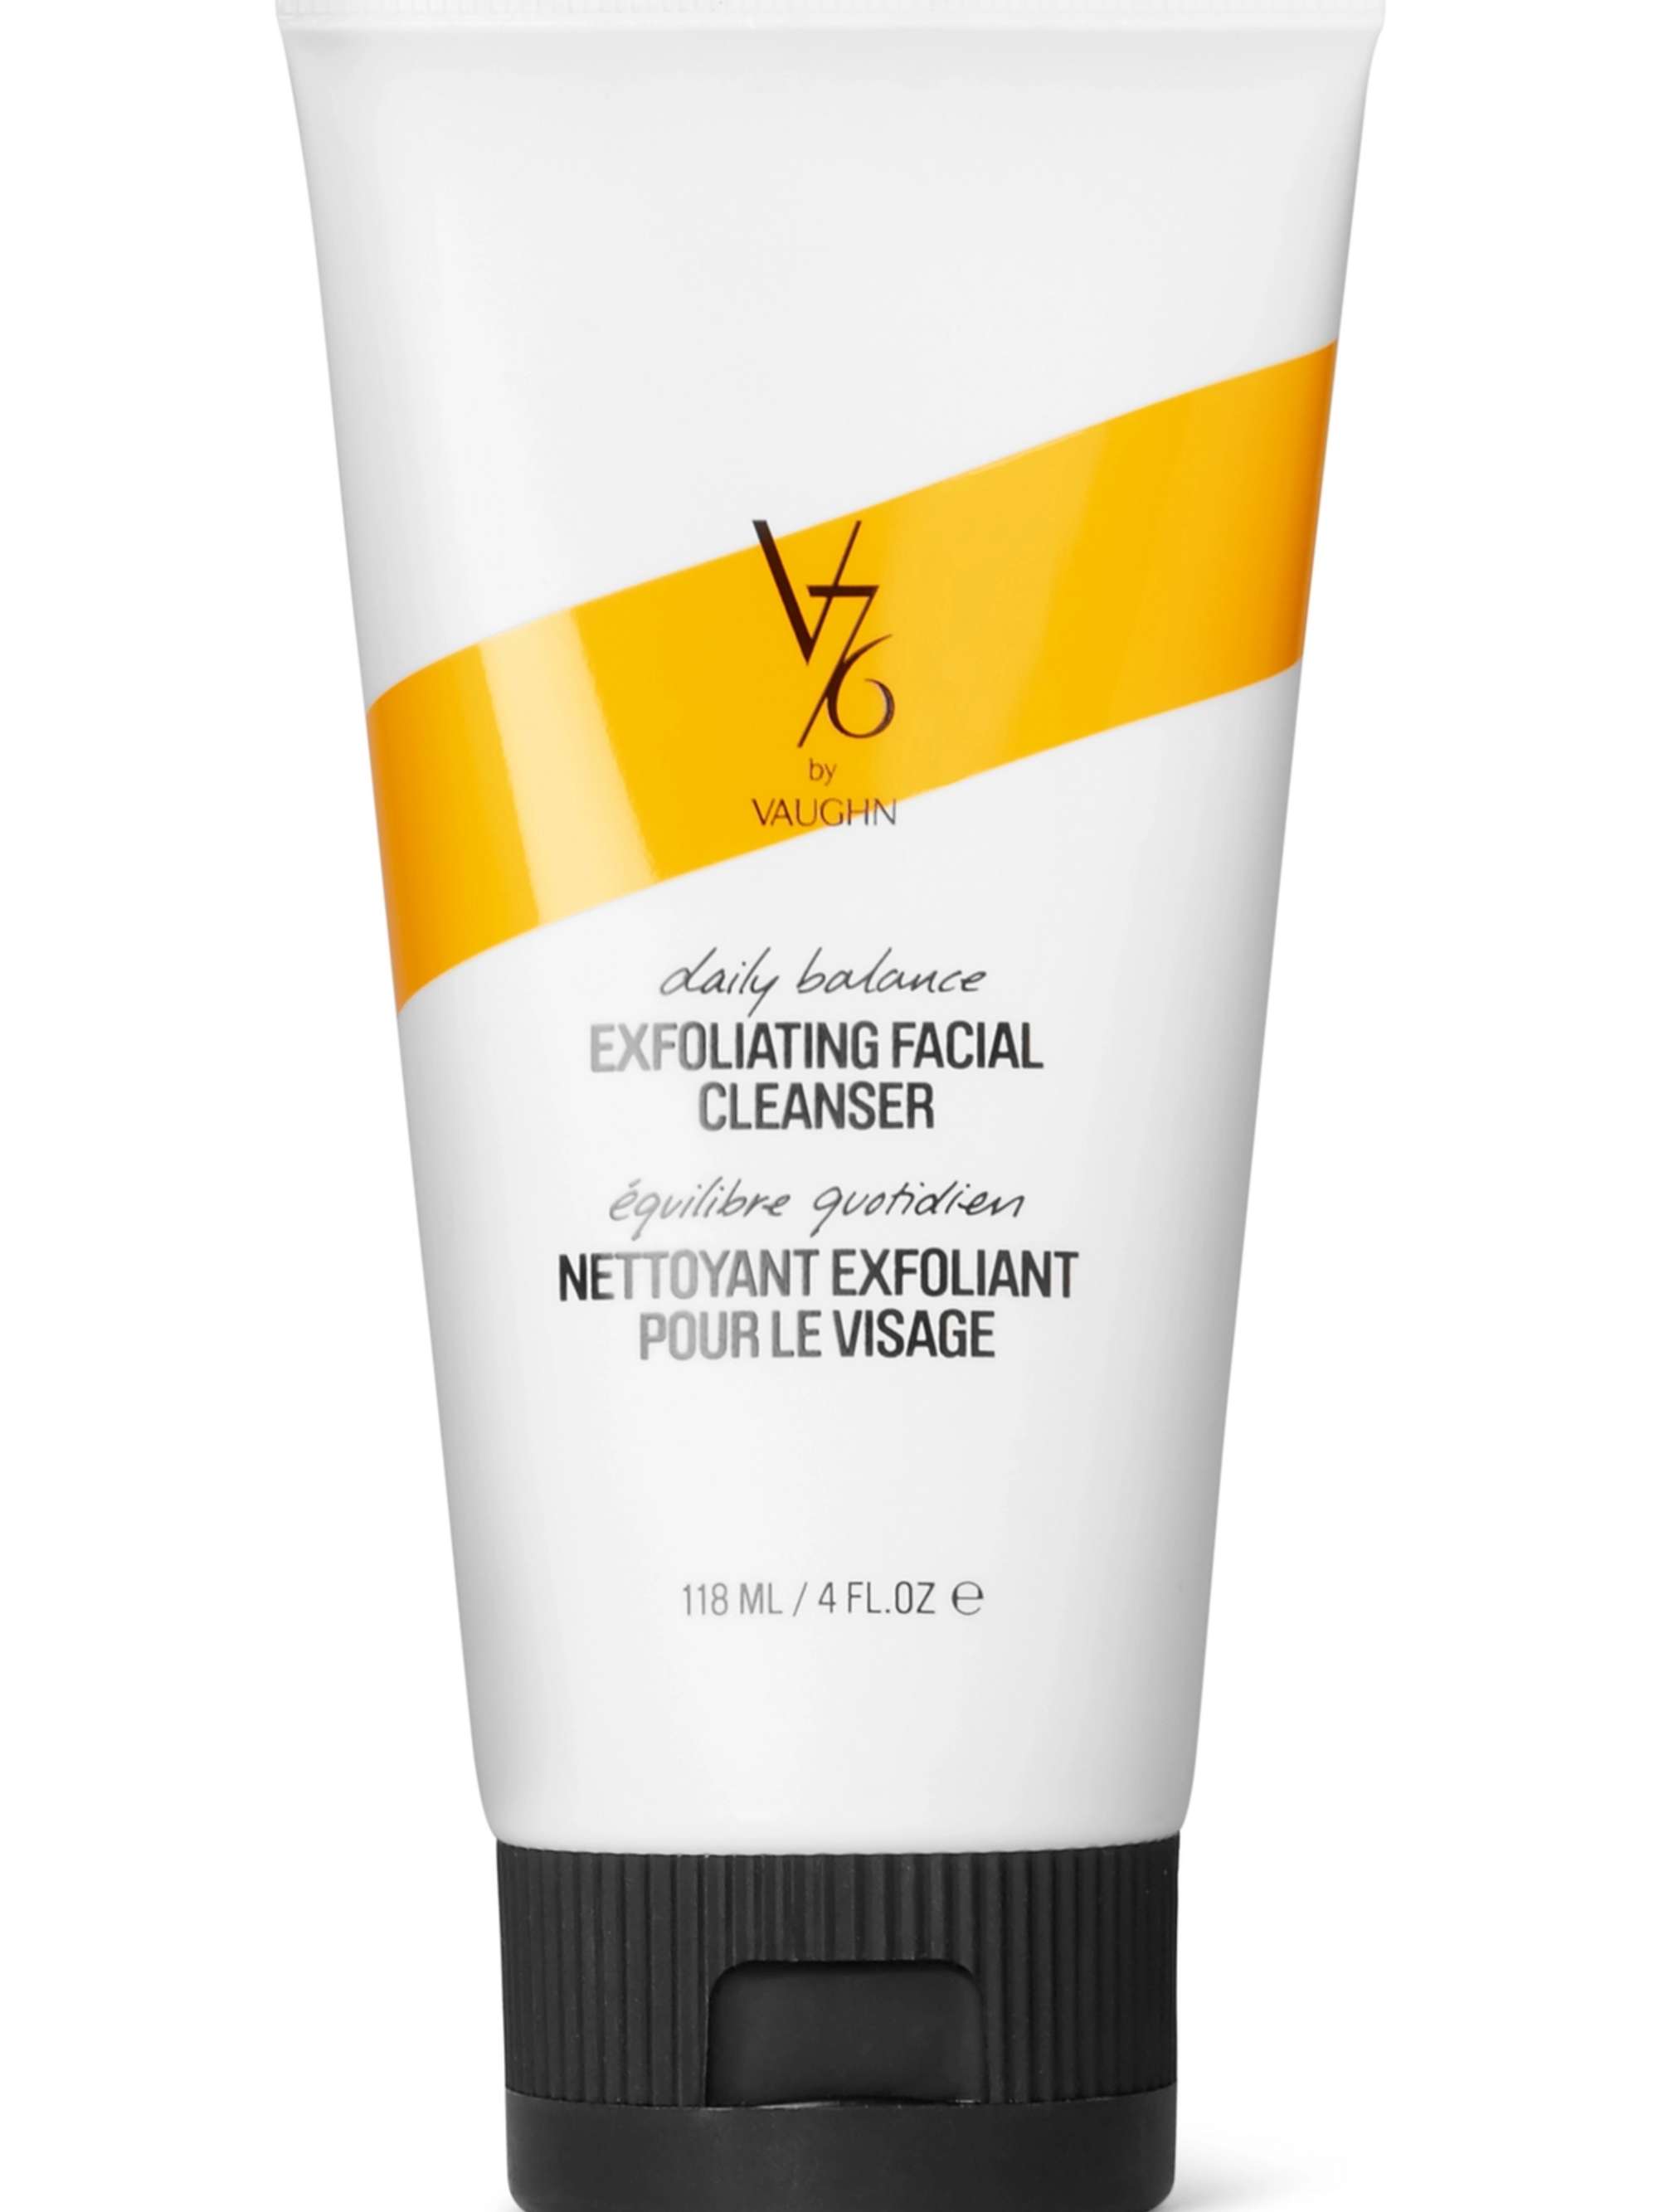 V76 Daily Balance Exfoliating Facial Cleanser, 118ml